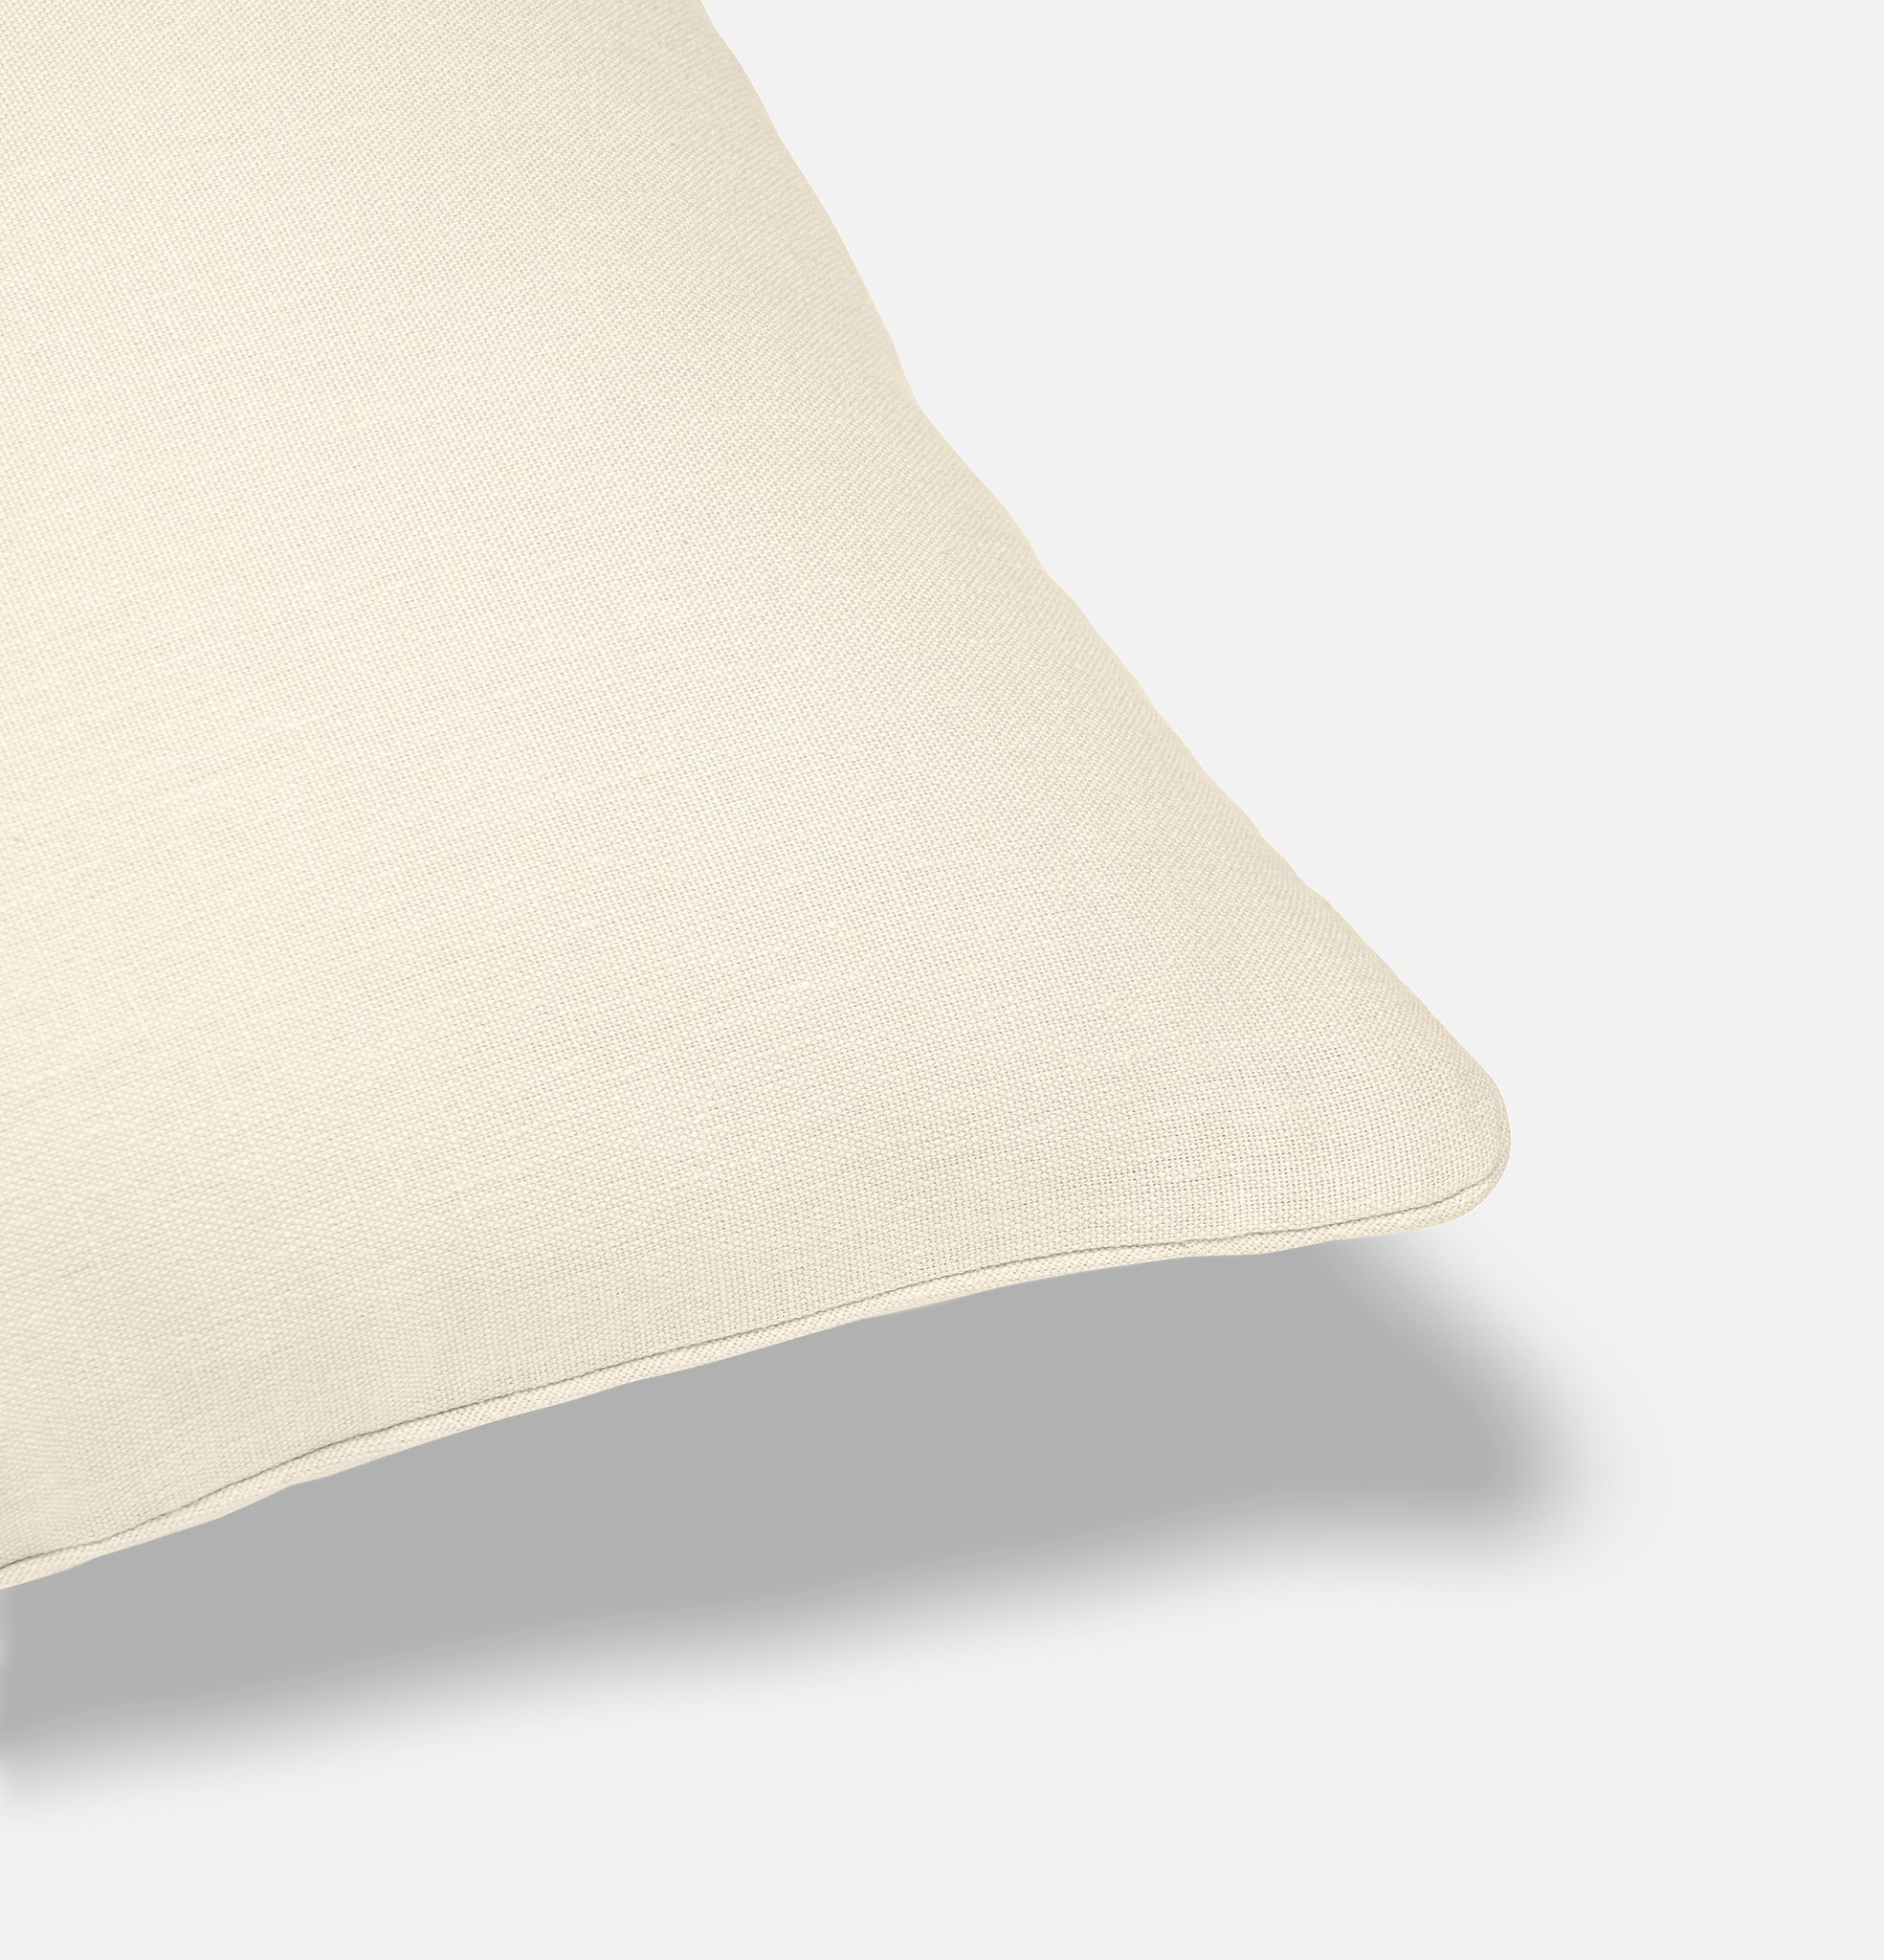 Corner detail of iridescent ivory linen cushion